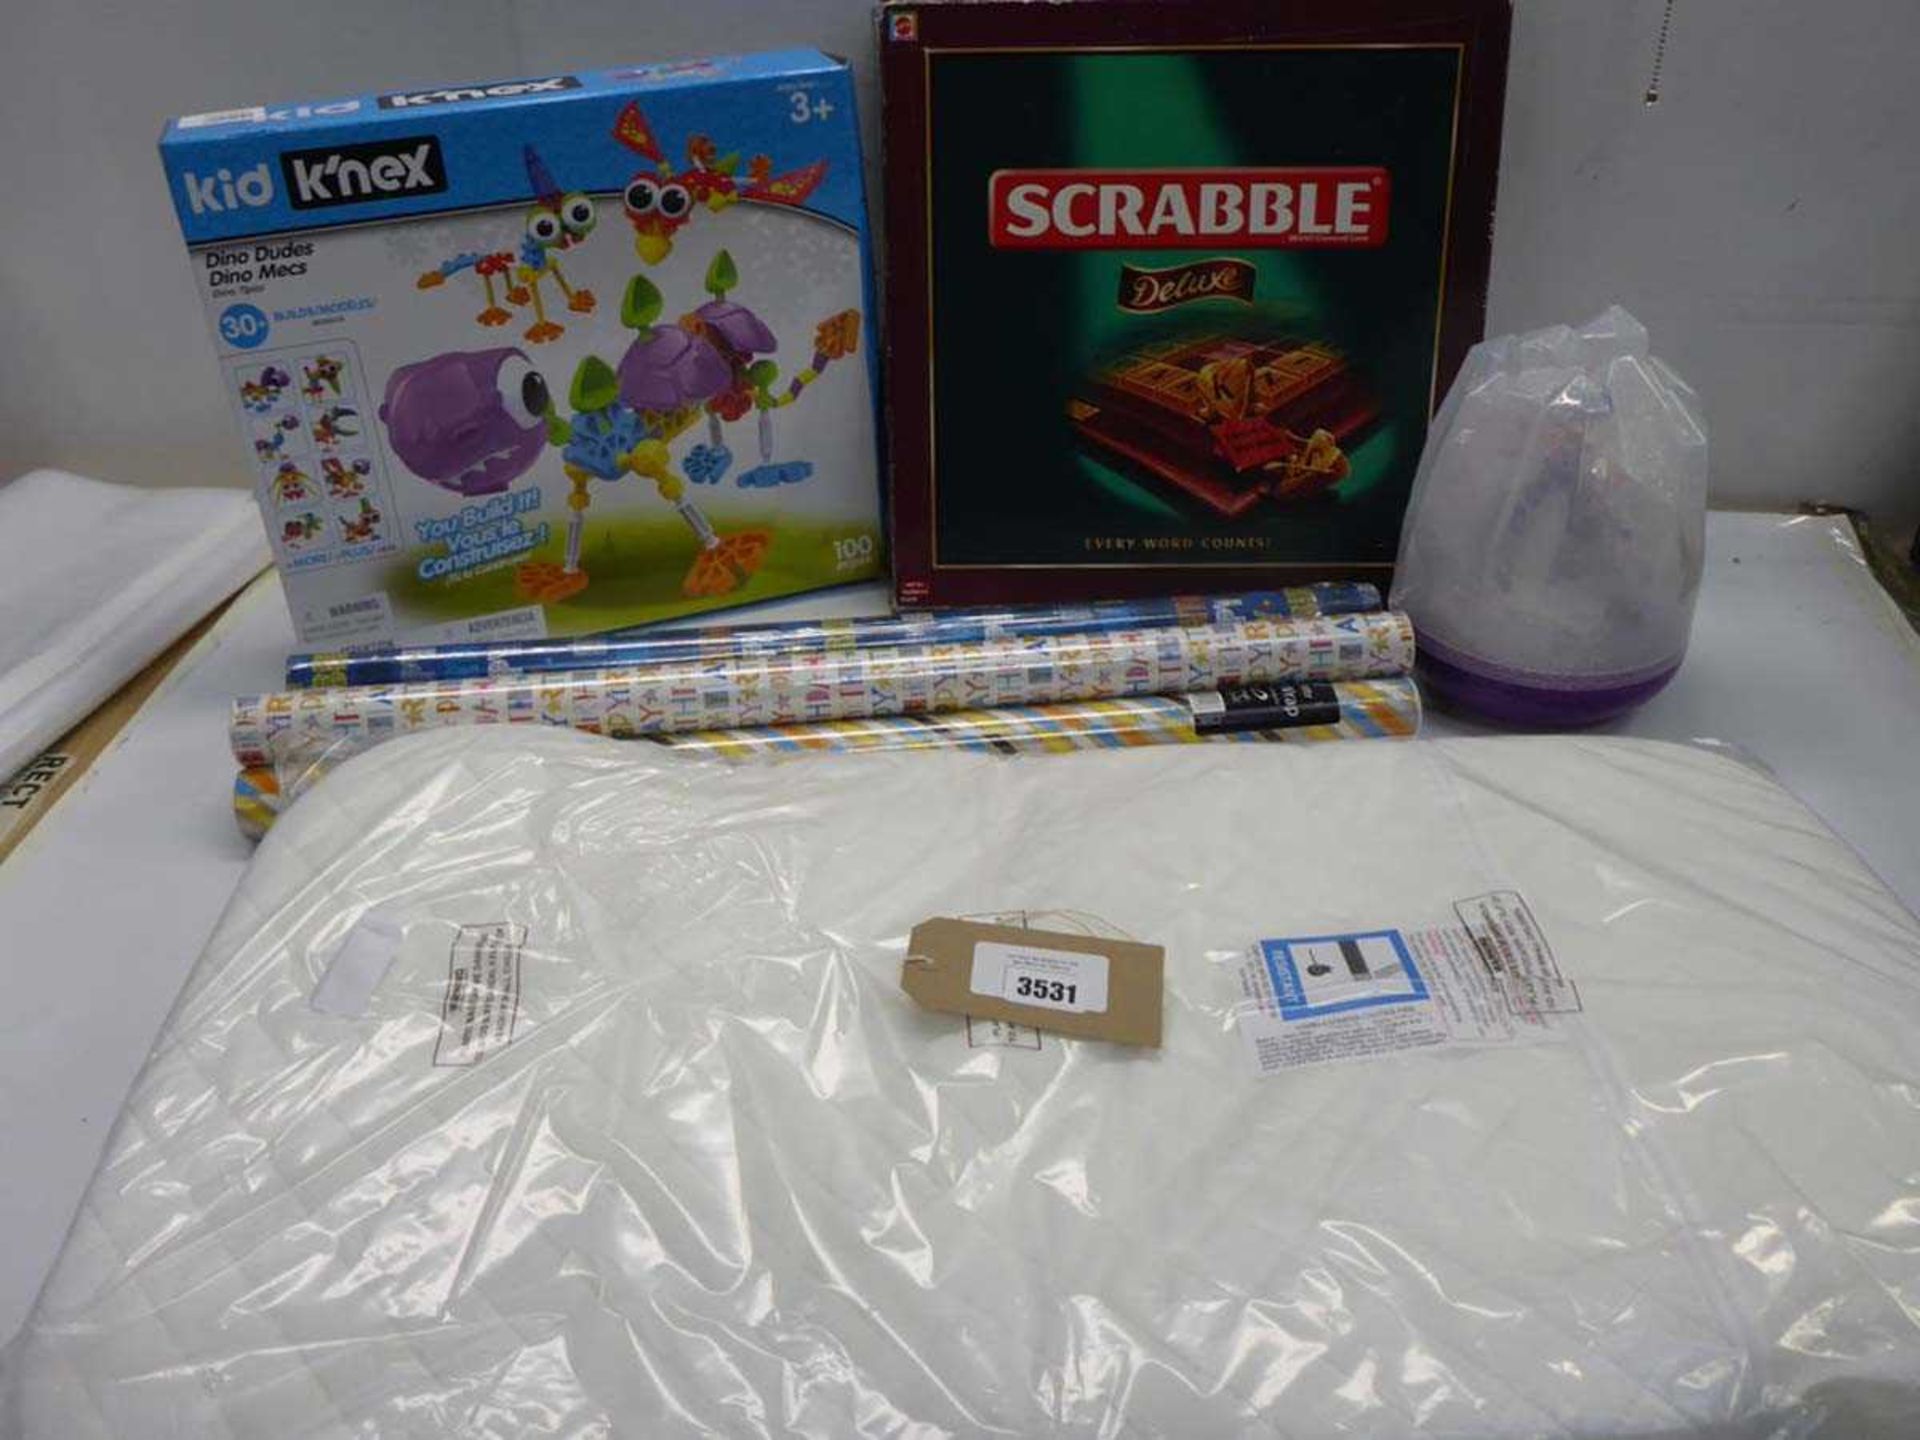 +VAT Scrabble Deluxe board game, Kid K'nex set, gift wrap and cot bed